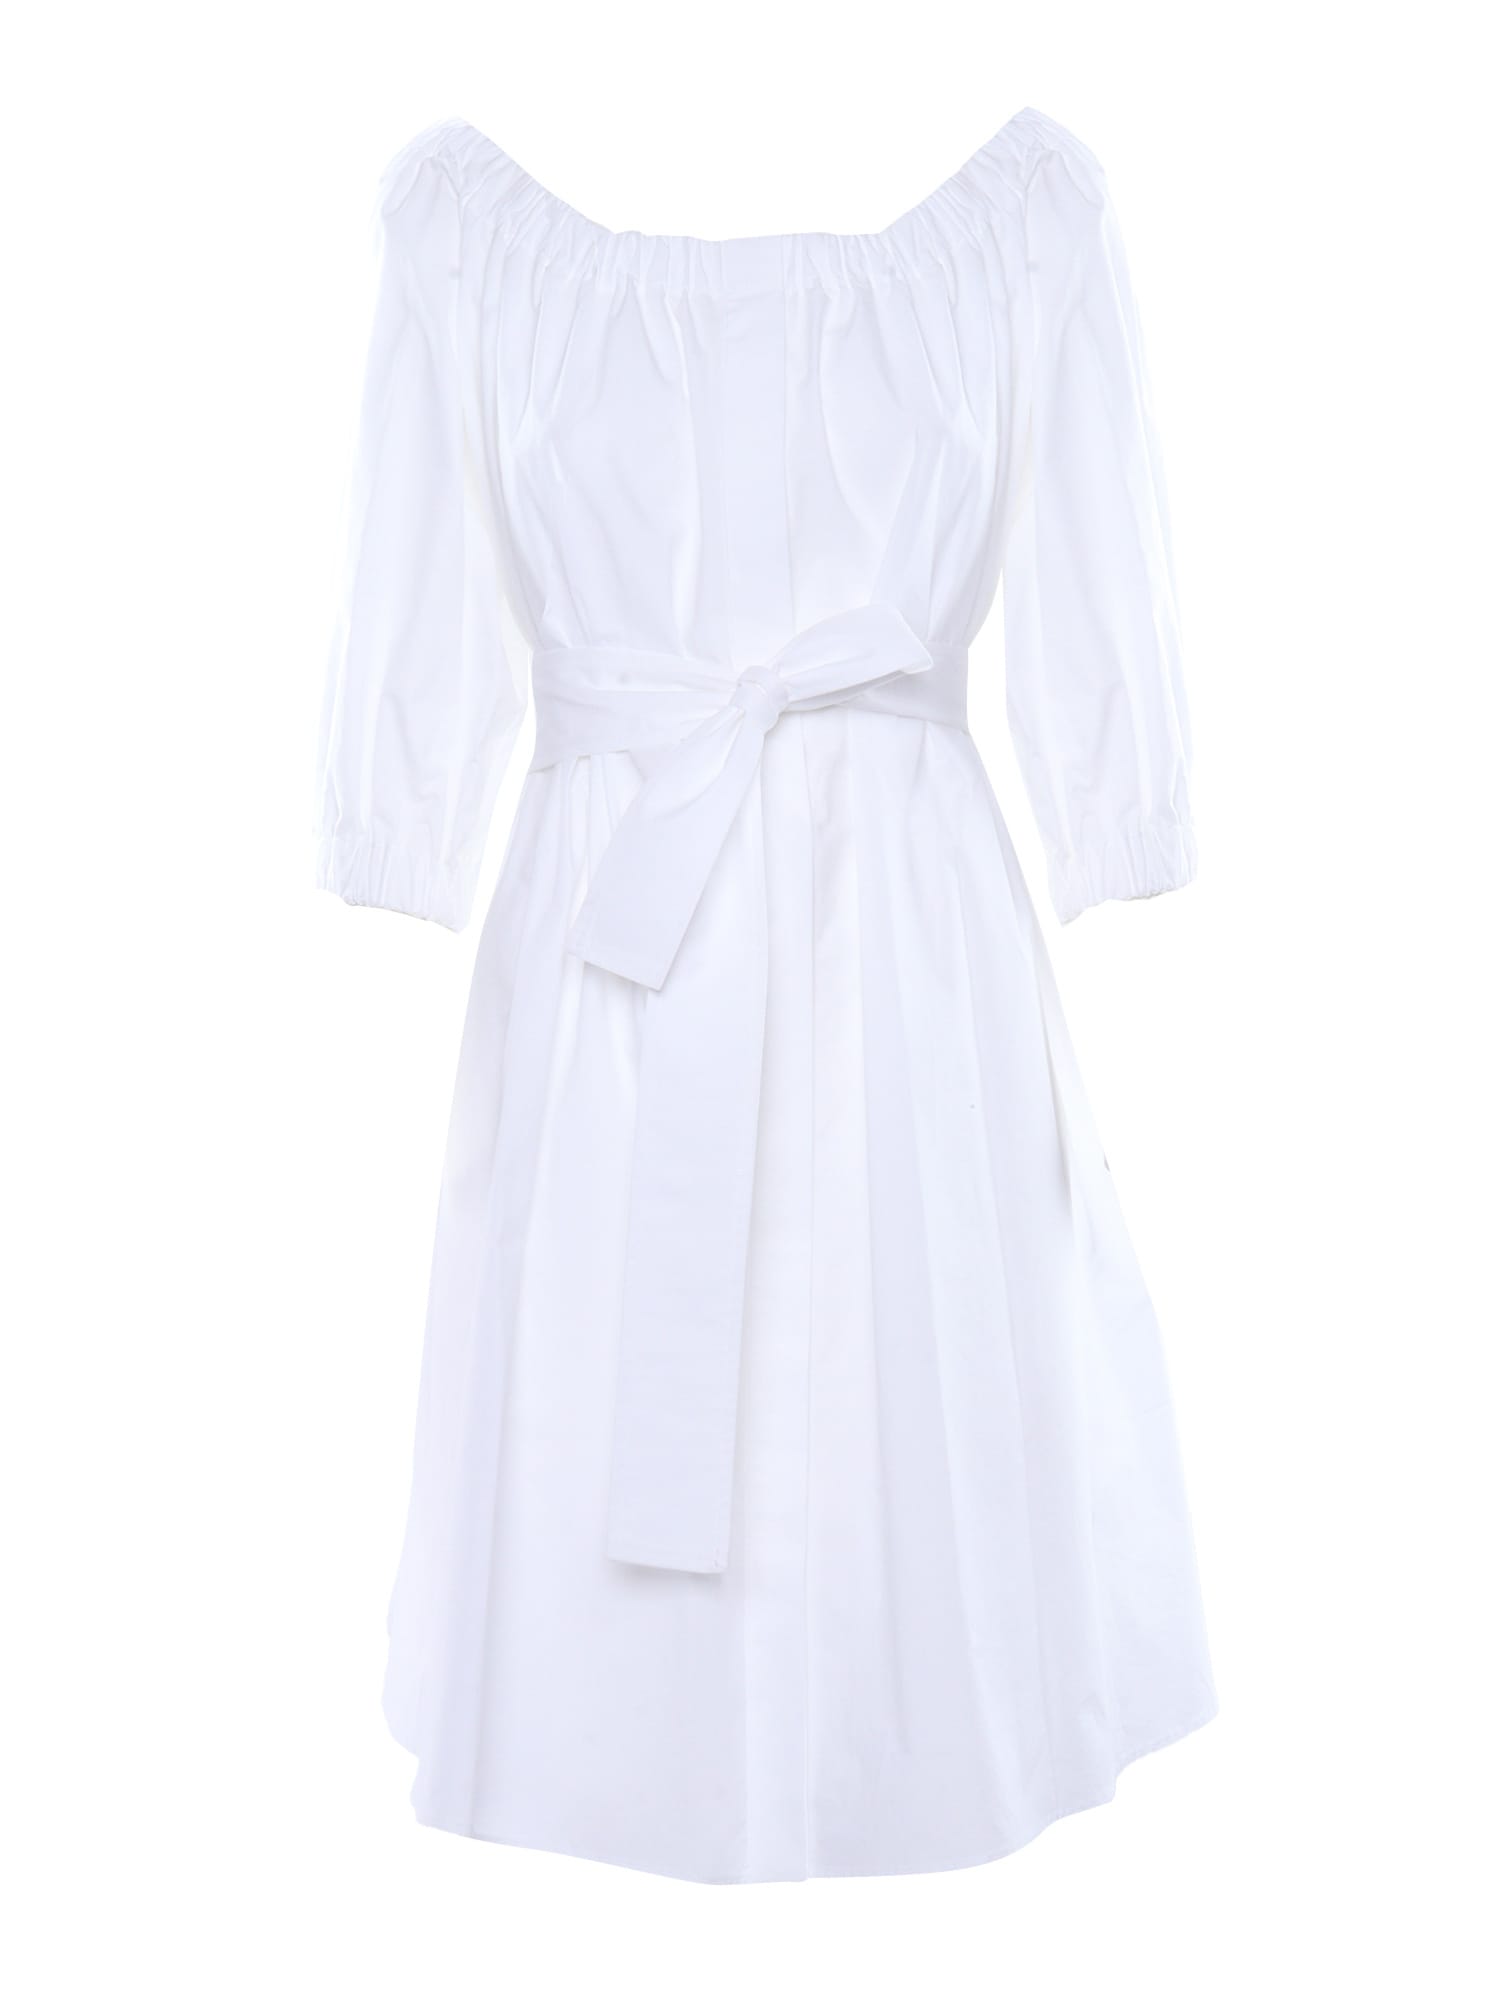 Parosh White Cotton Dress